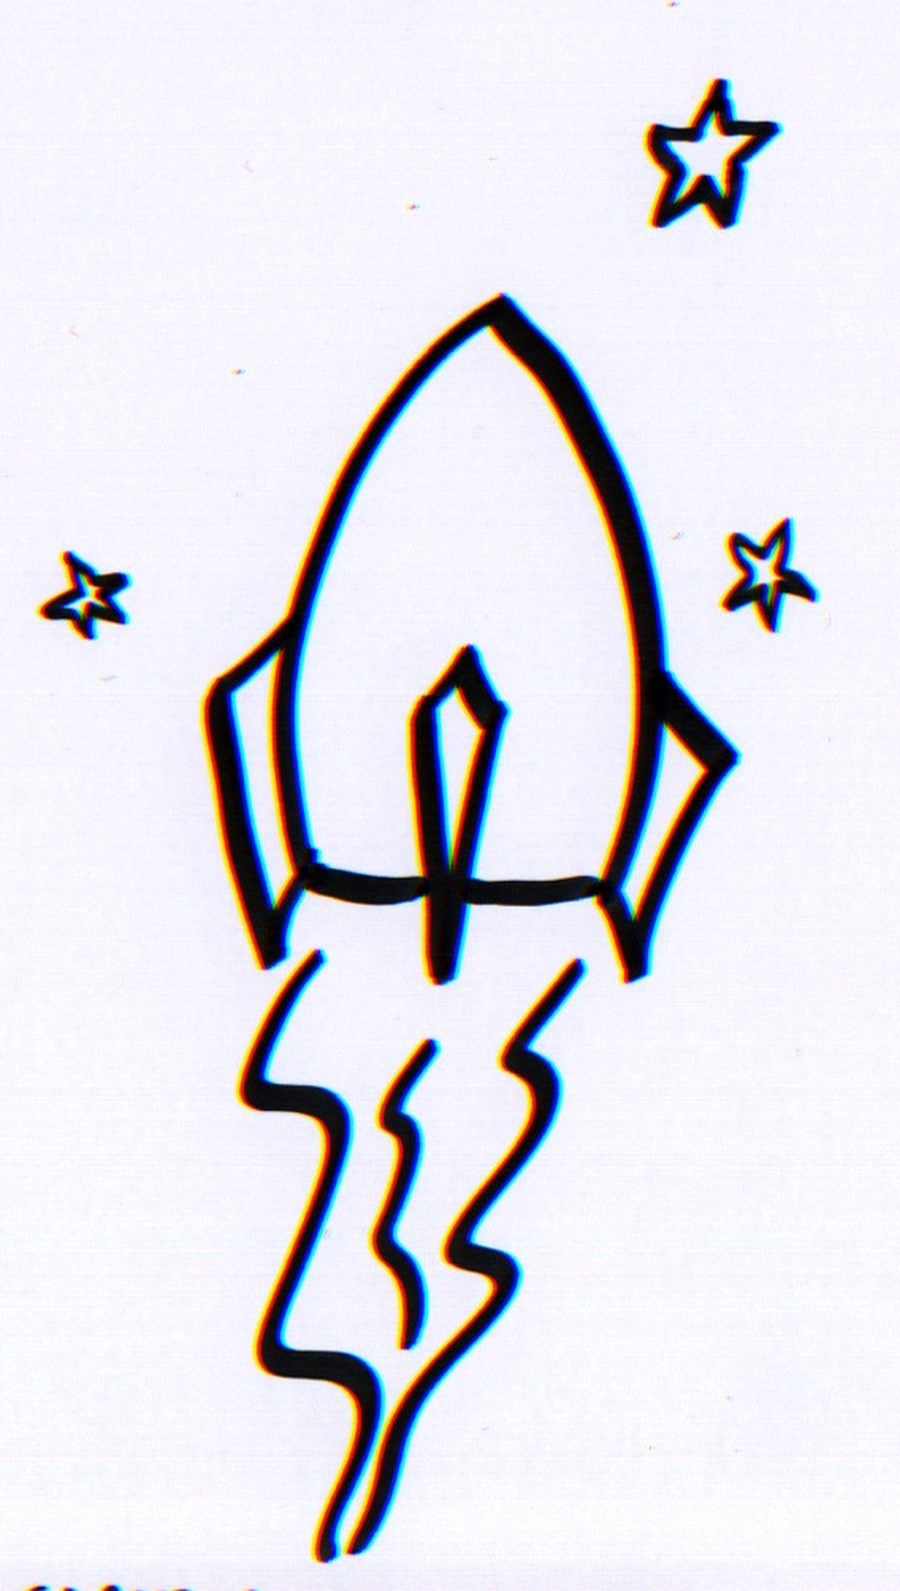 How To Draw A Cartoon Rocket Ship Step By Step - Goimages Coast